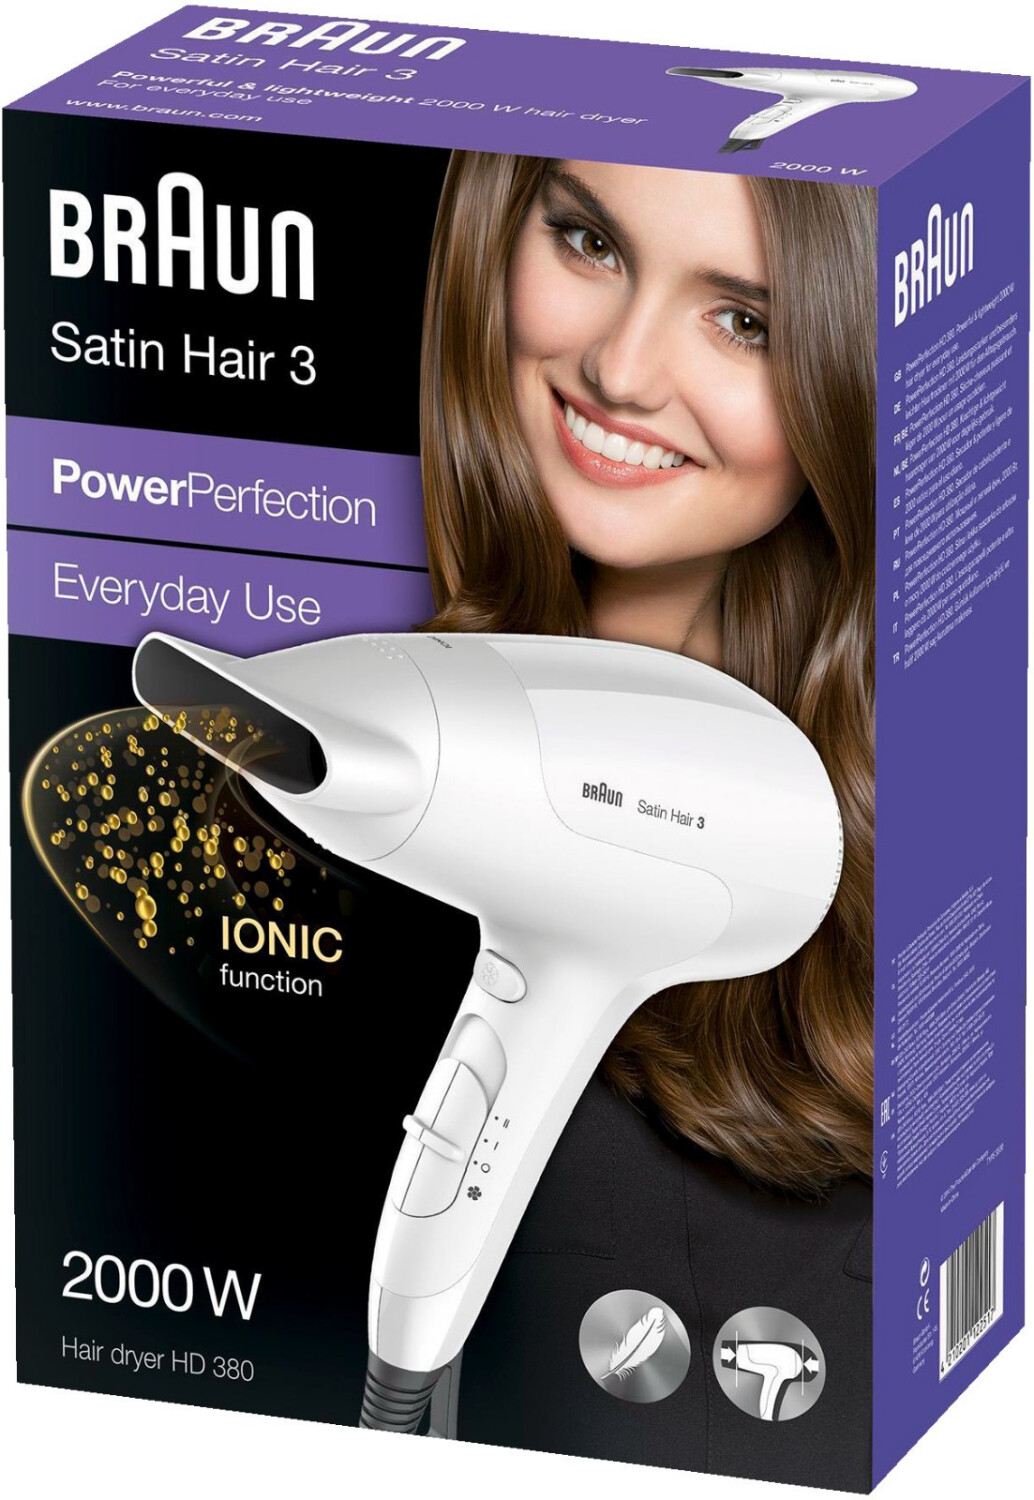 Braun Satin Hair bei Preisvergleich 34,99 PowerPerfection | 380 HD € ab 3